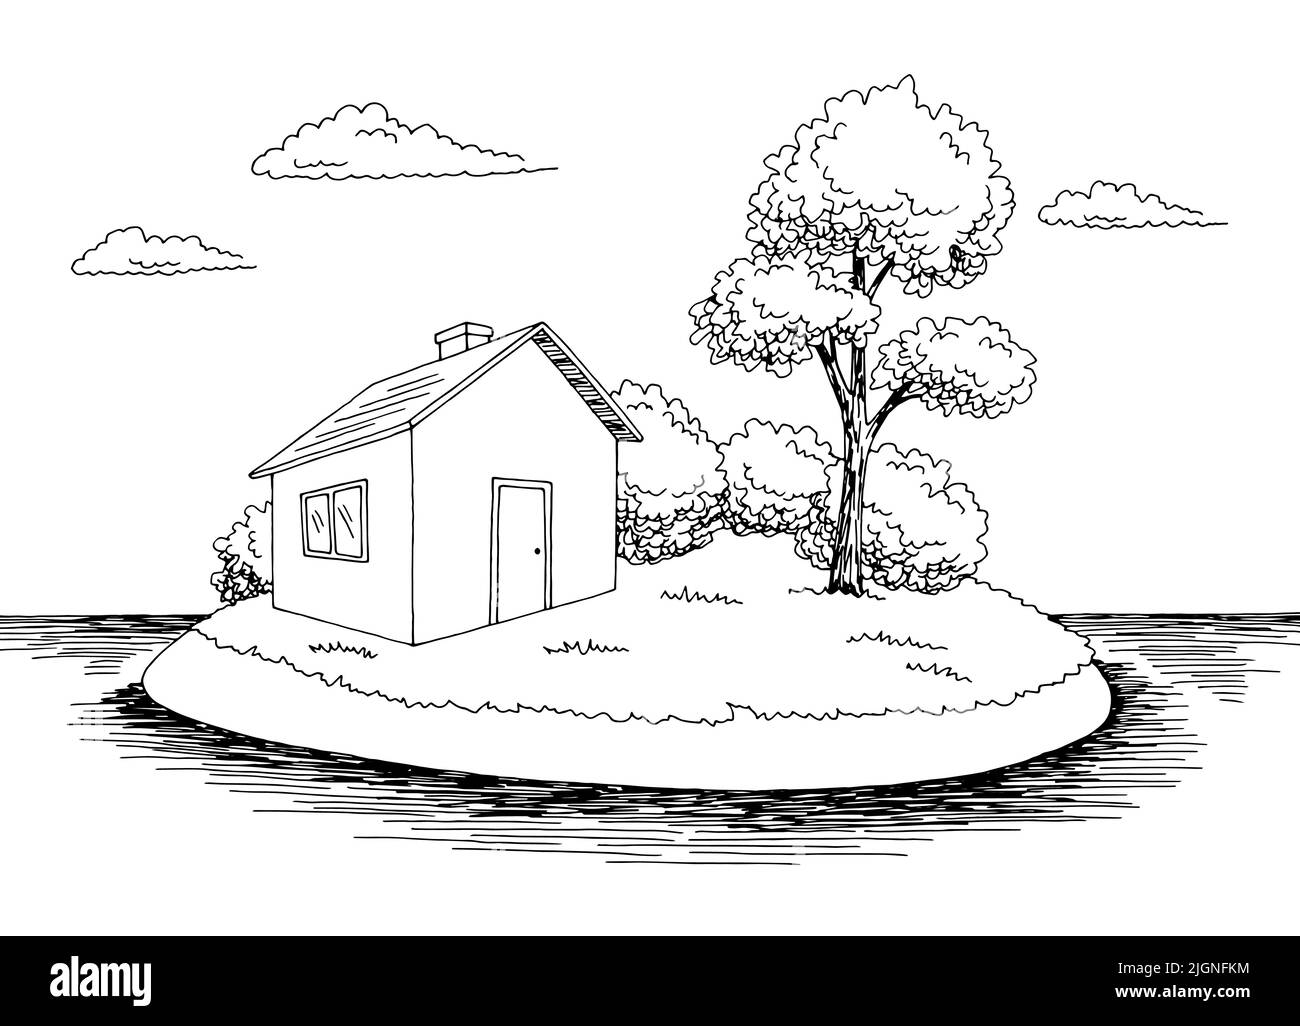 Inselhaus Grafik schwarz weiß Landschaft Skizze Illustration Vektor Stock Vektor